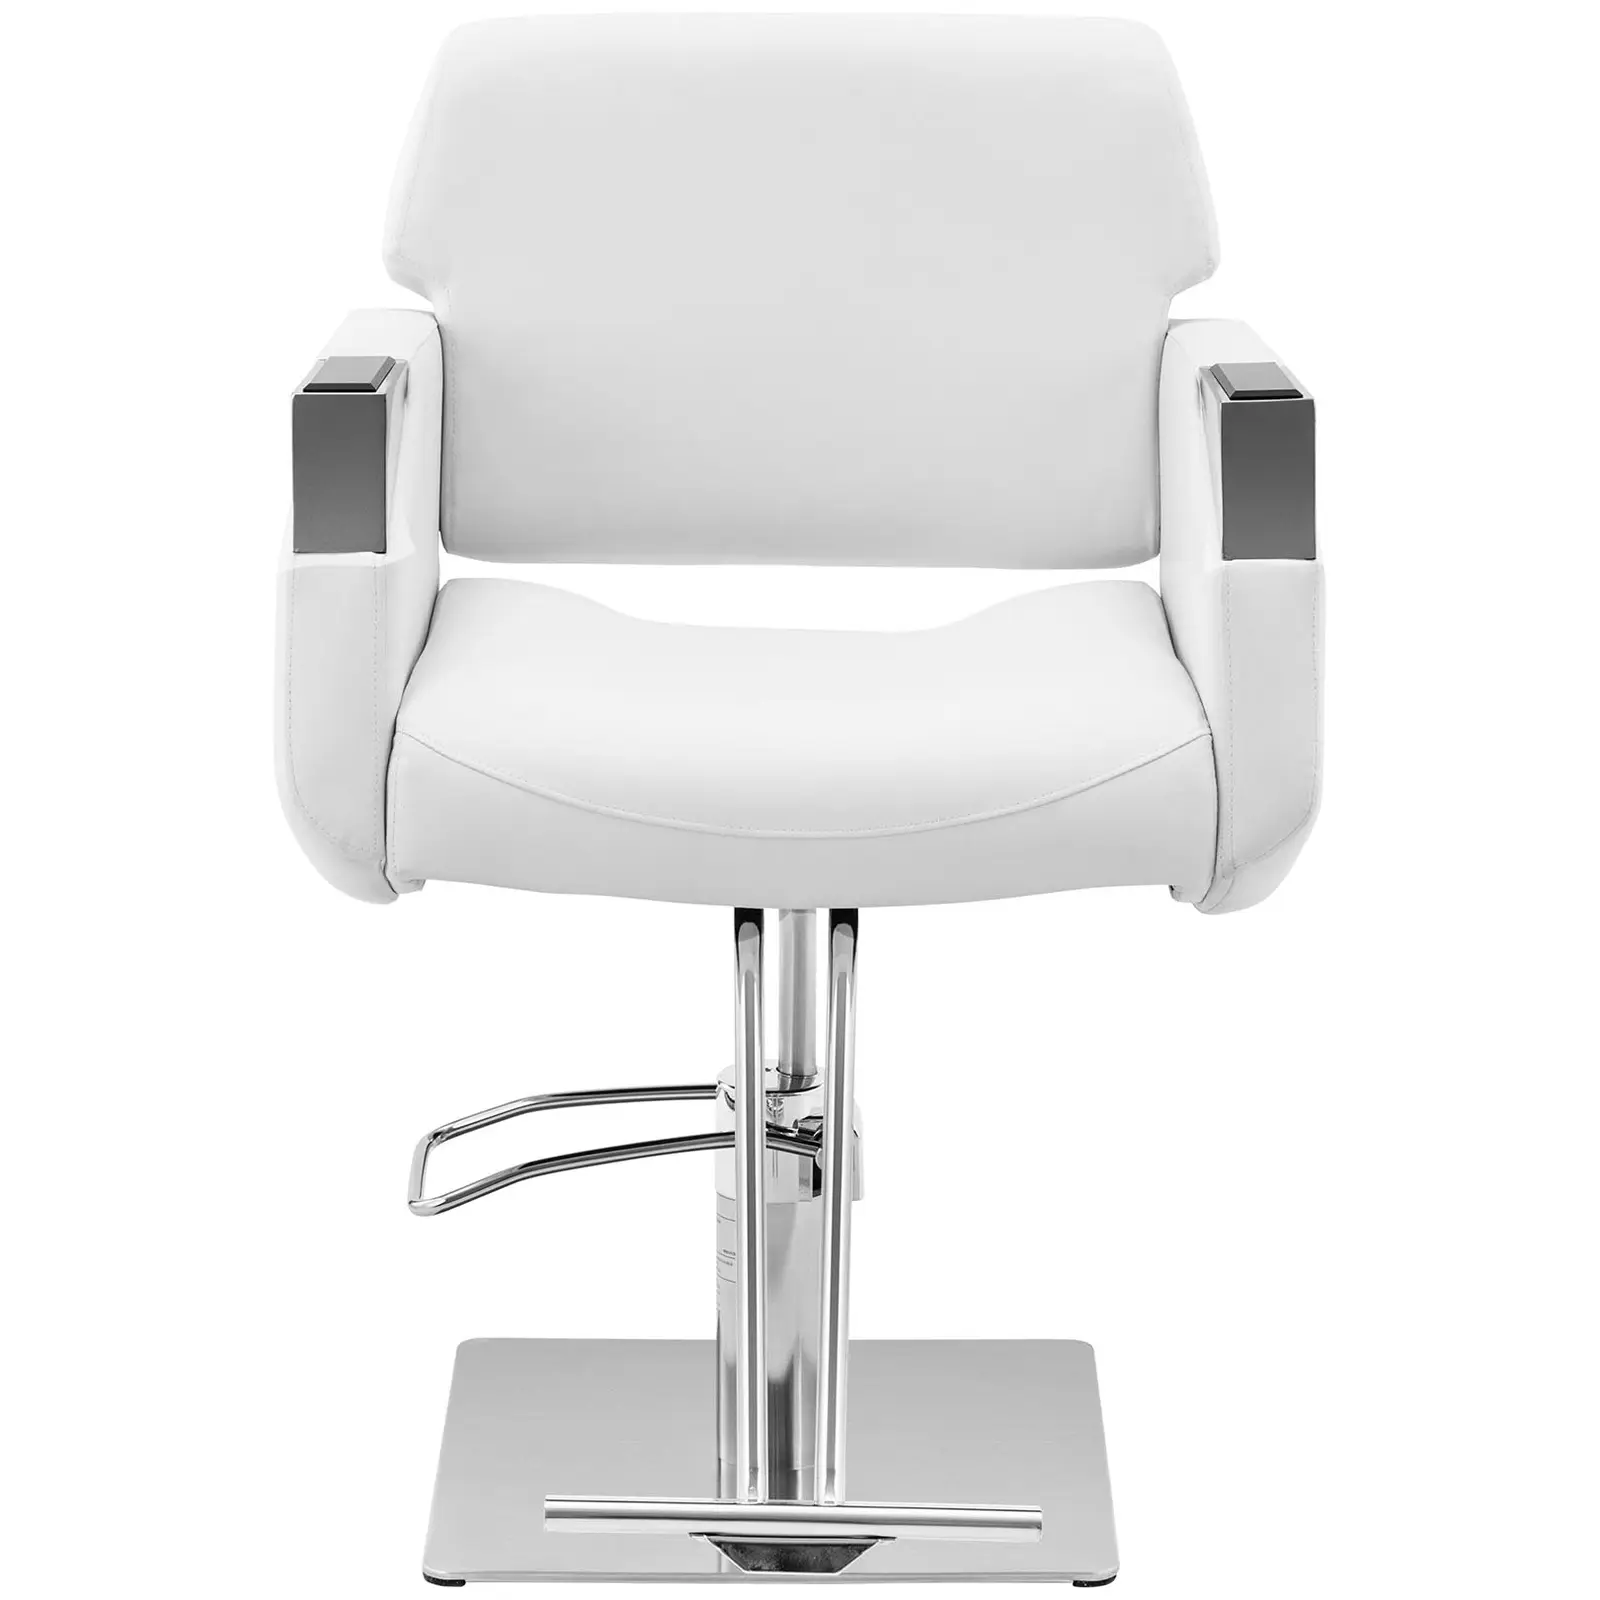 Fotel fryzjerski z podnóżkiem - 880-1030 mm - 200 kg - srebrny, biały